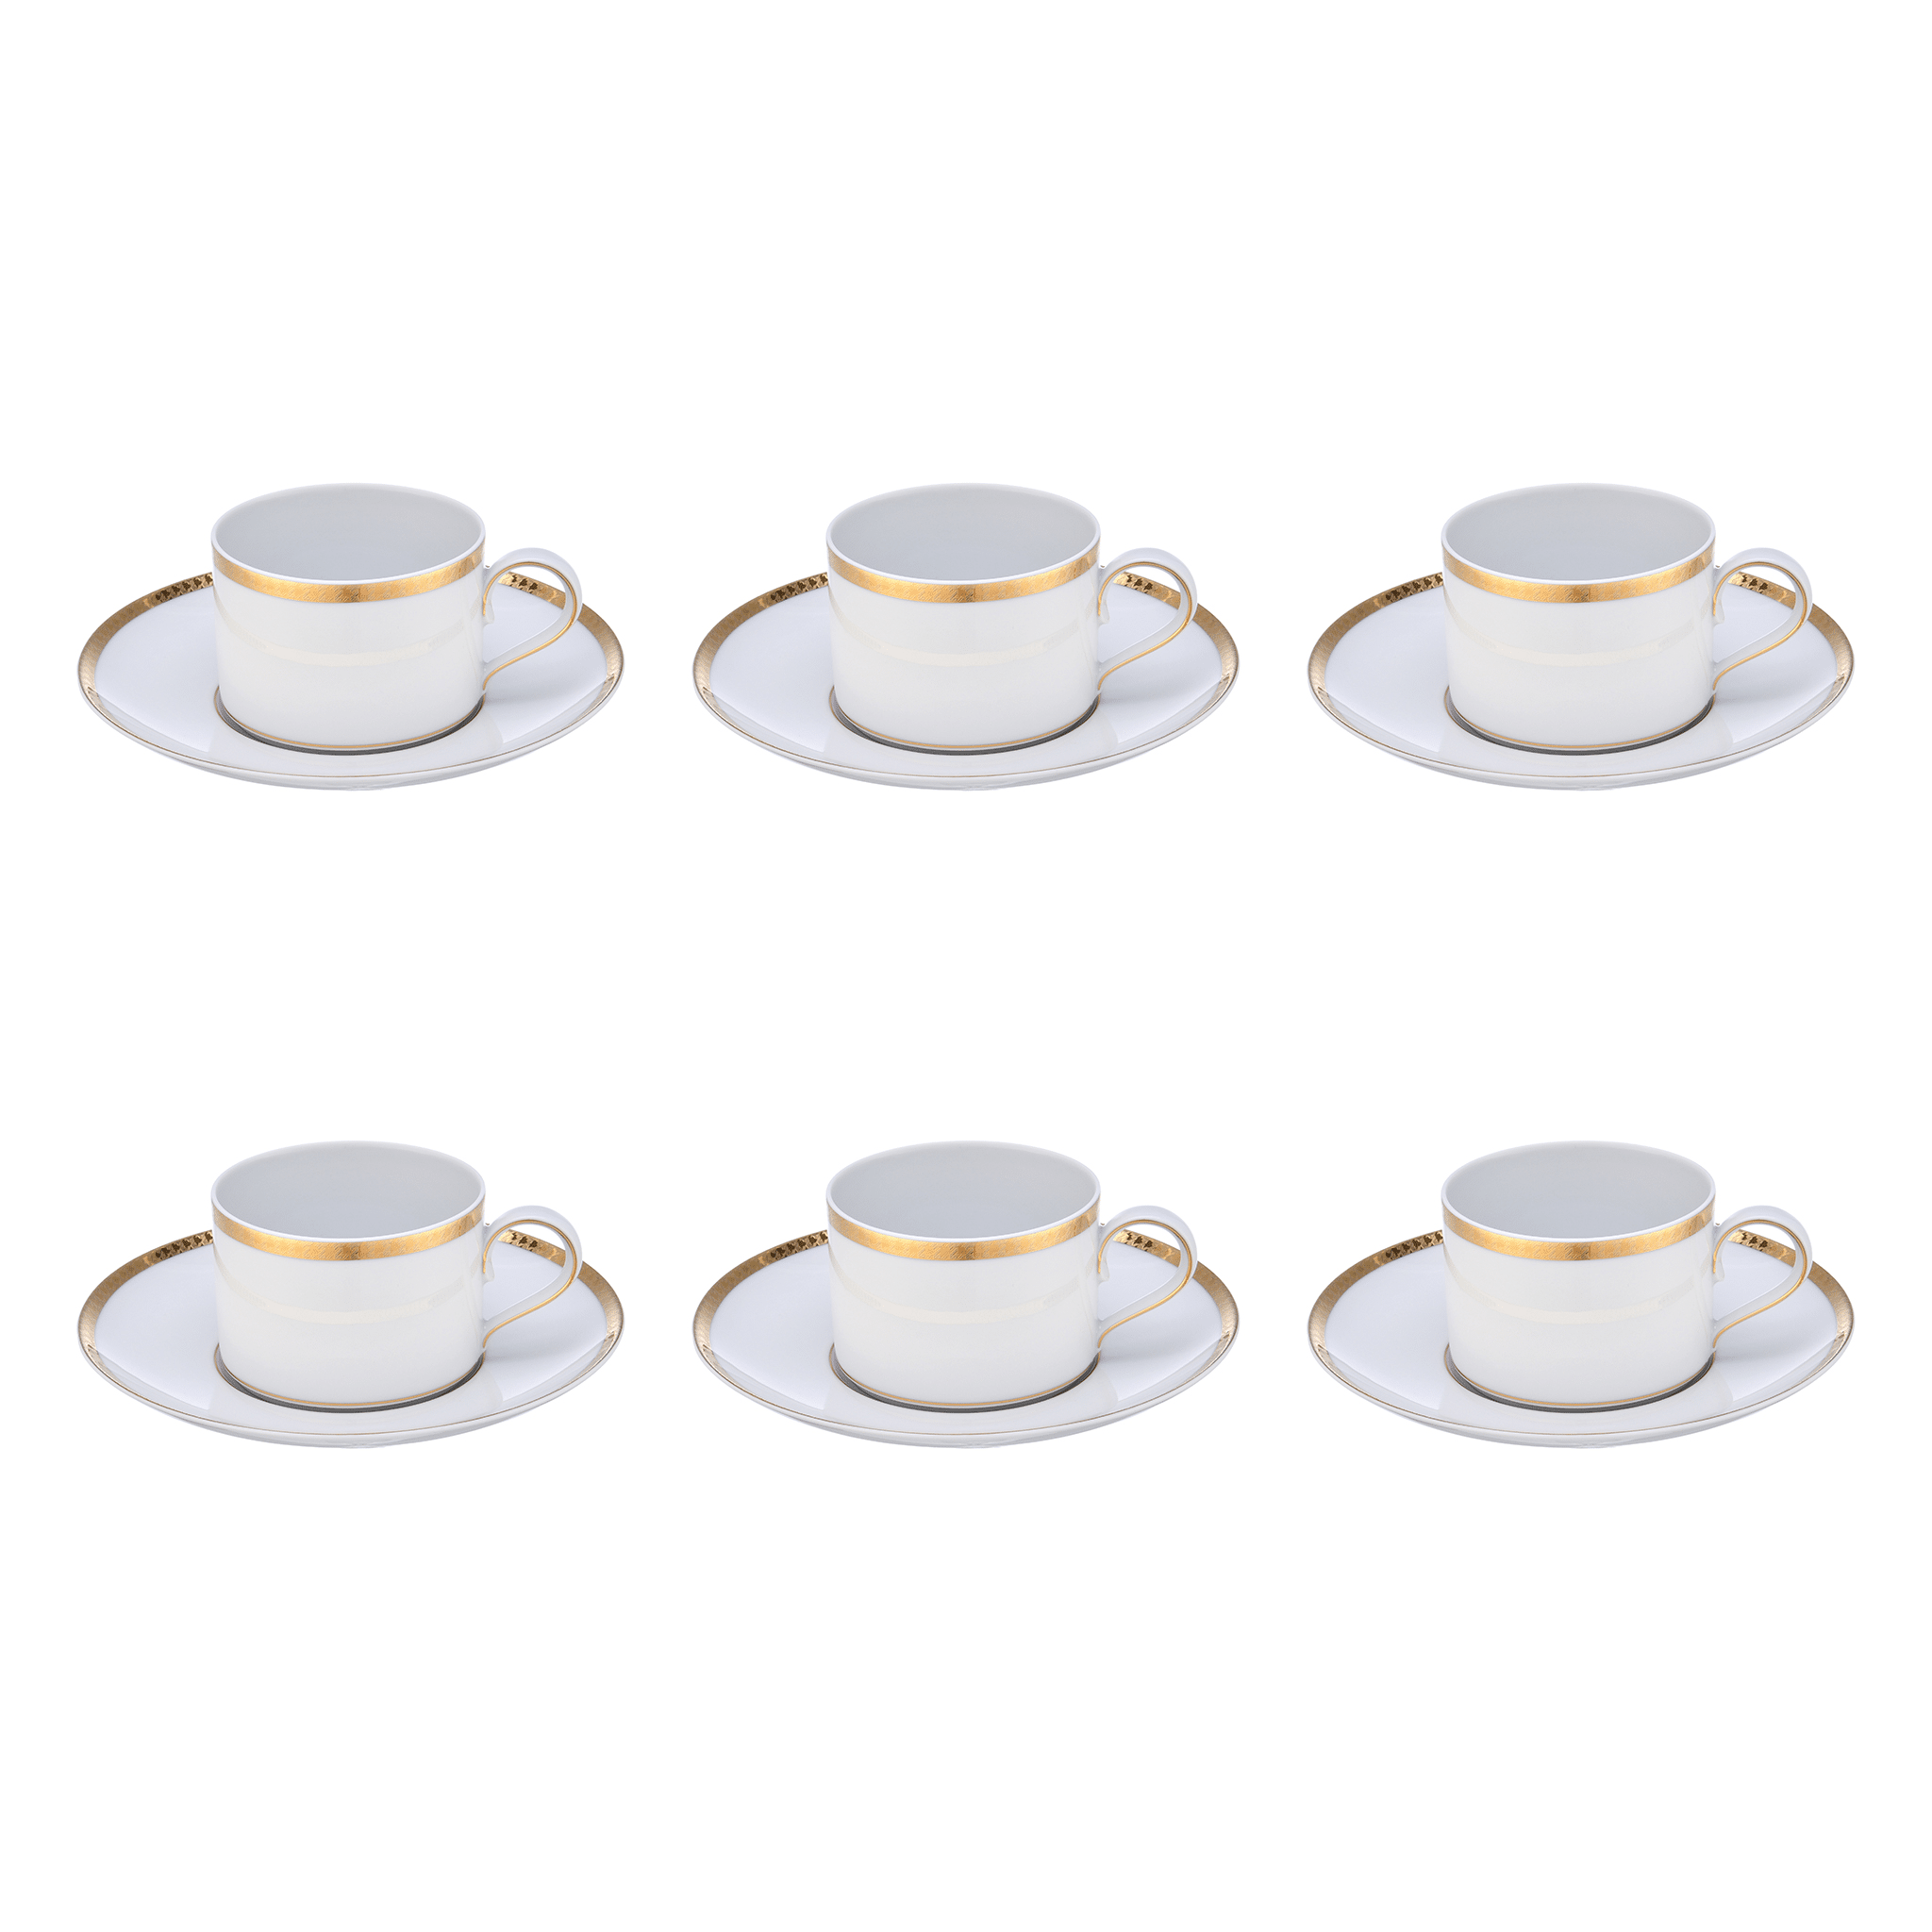 Falkenporzellan - Tea Set 6 Pieces - Gold - Porcelain - 1500035